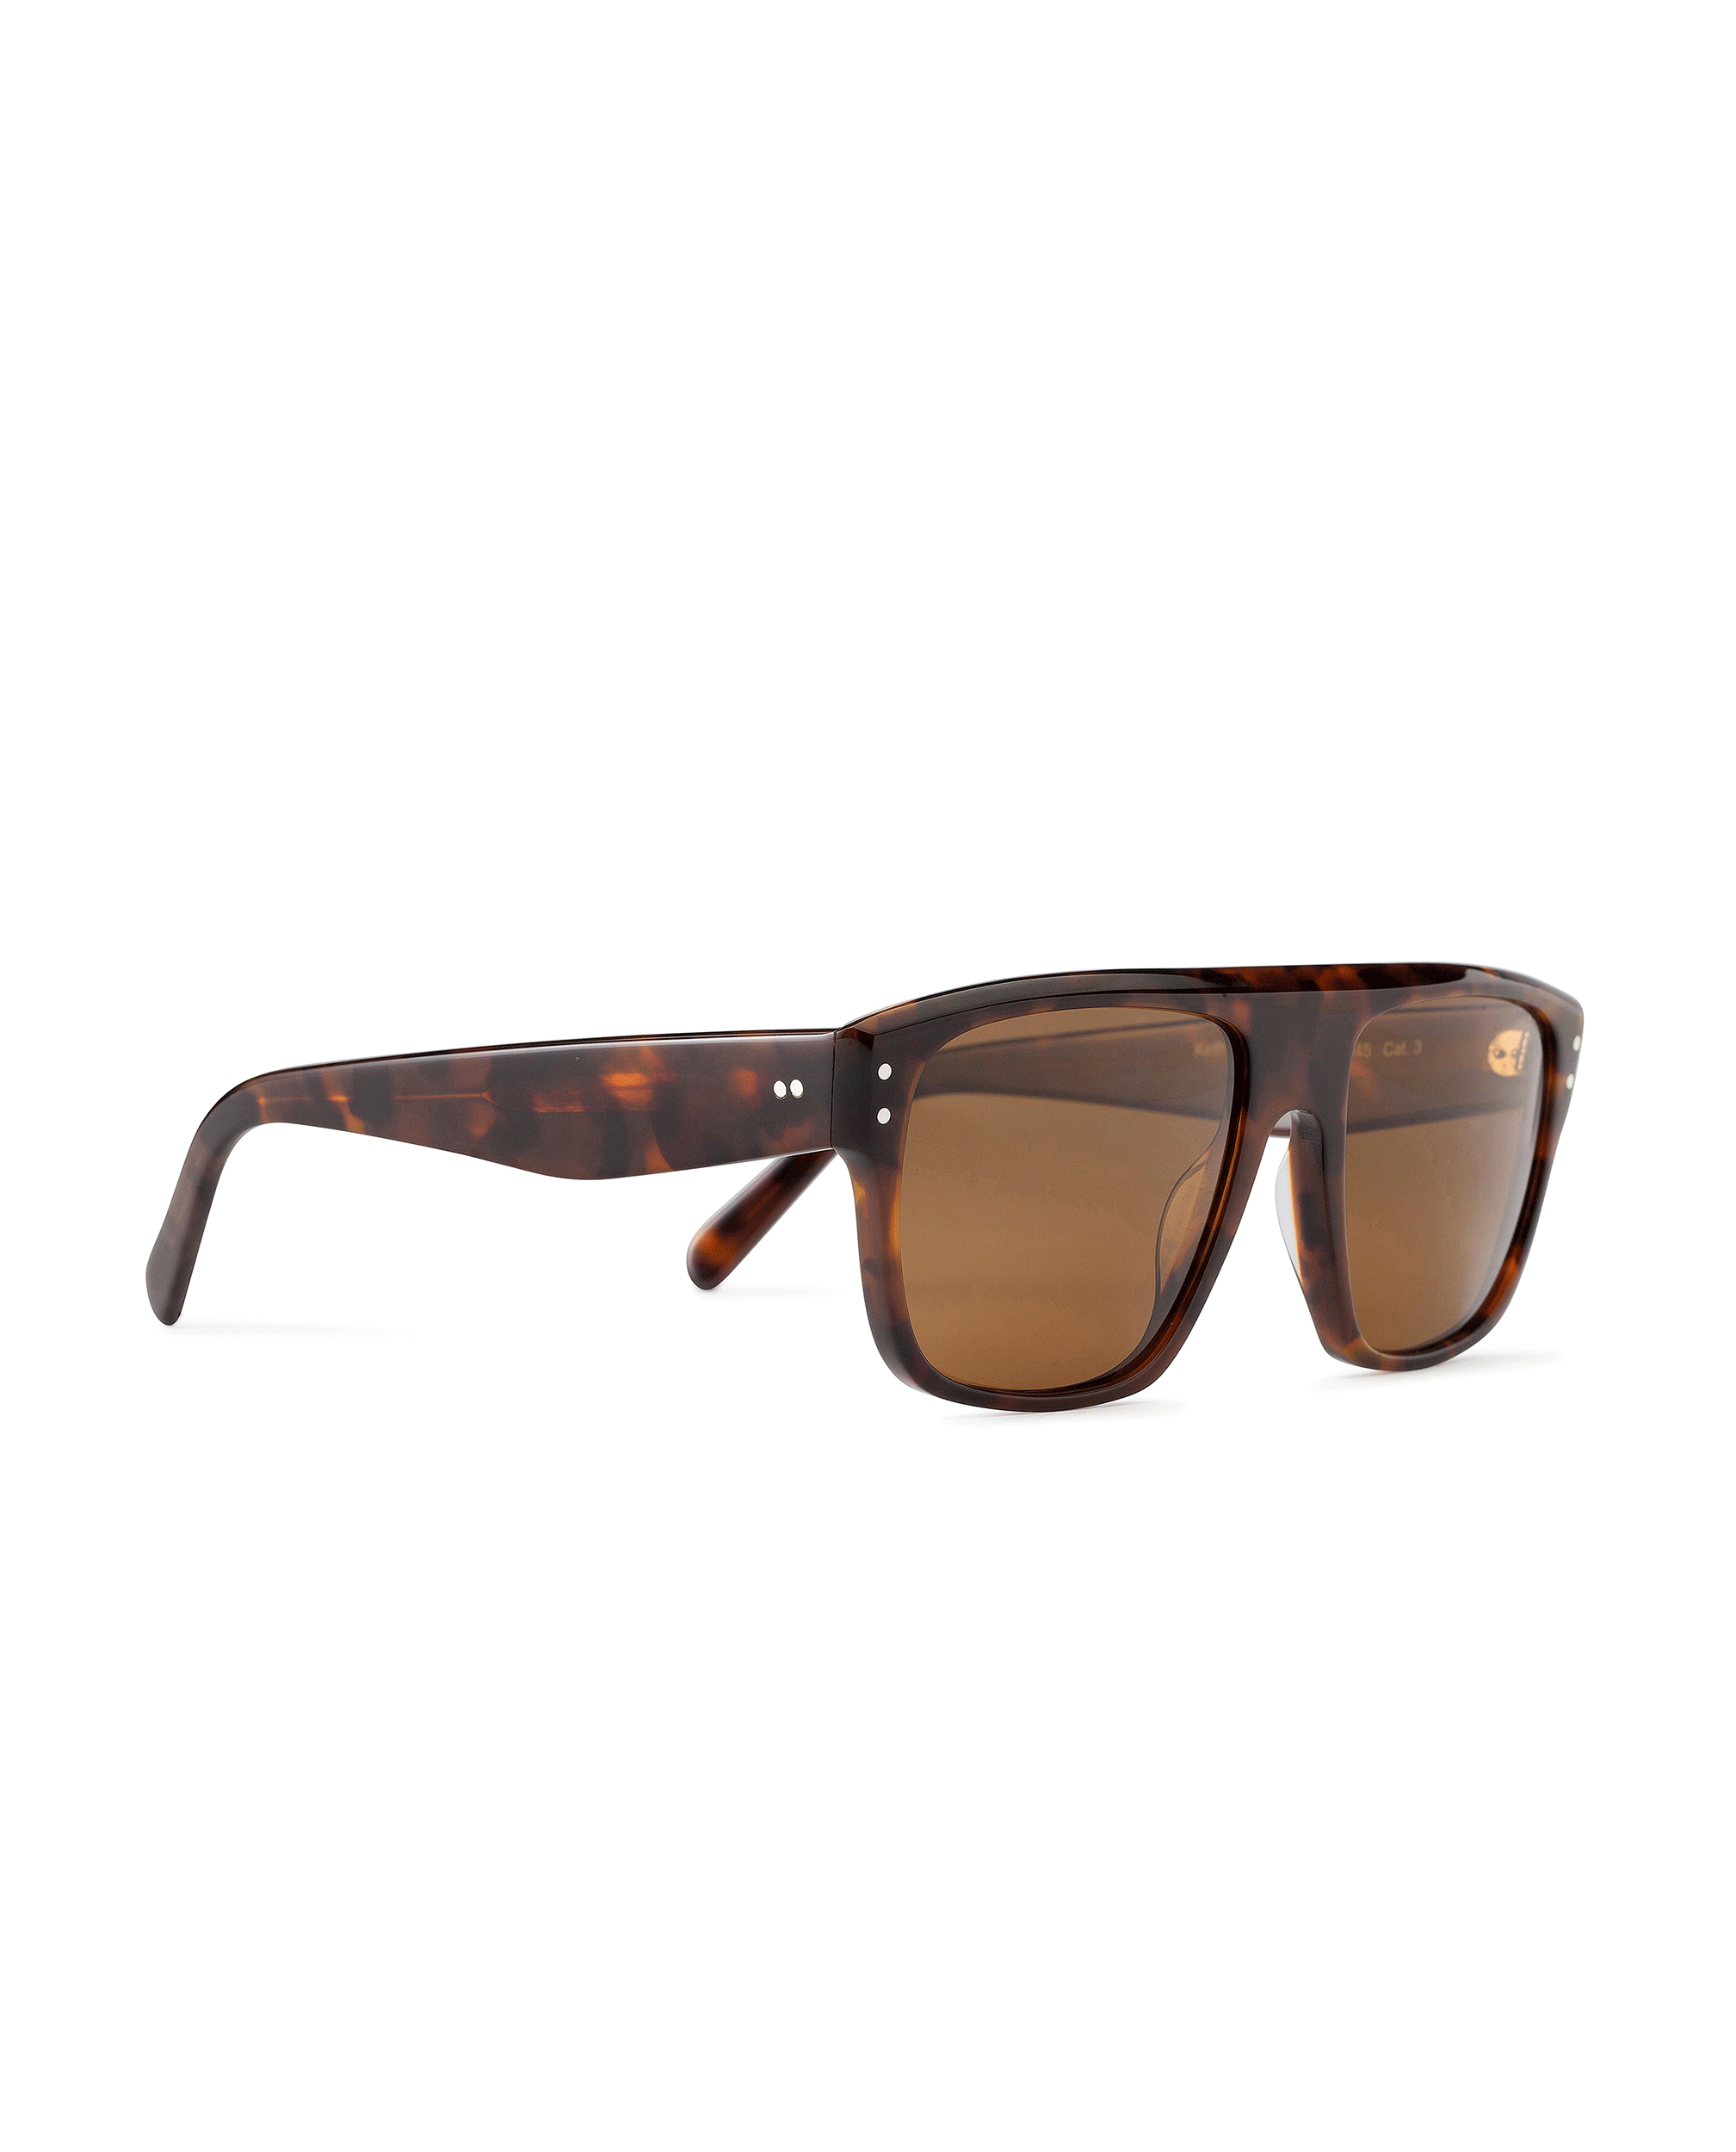 KEITH Sunglasses Tortoise - Brown